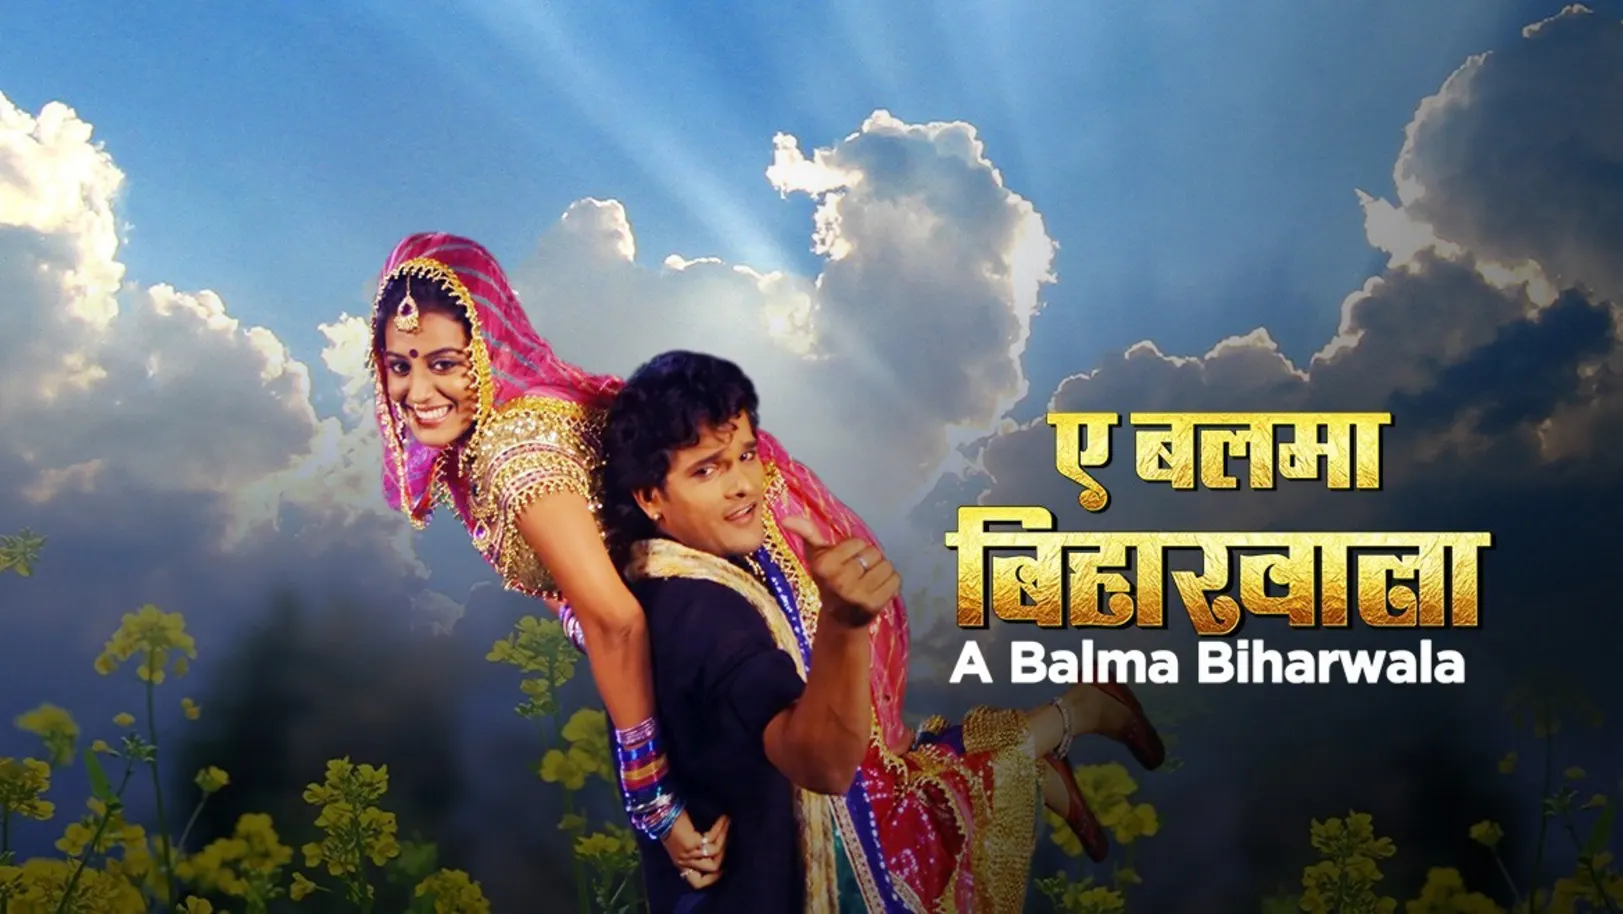 A Balma Bihar Wala Movie